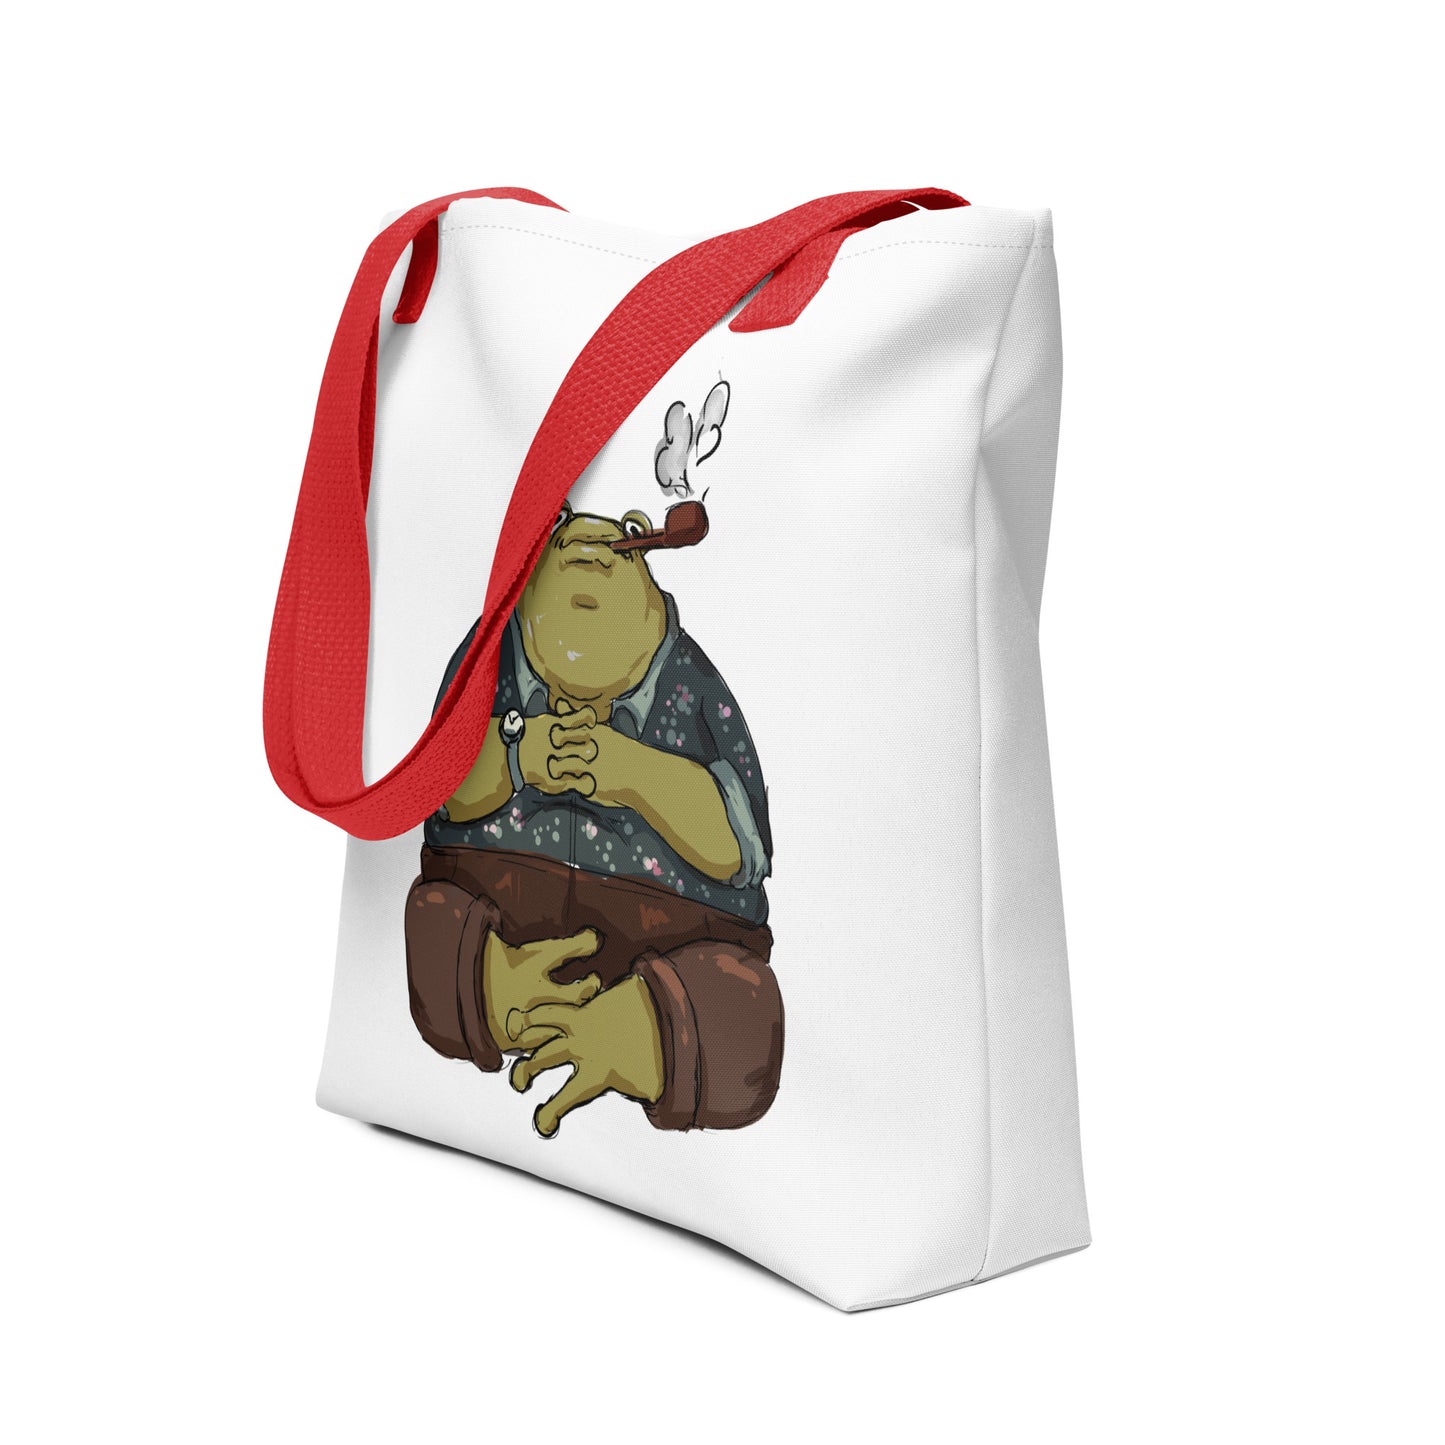 Crapaud the Toad Tote bag